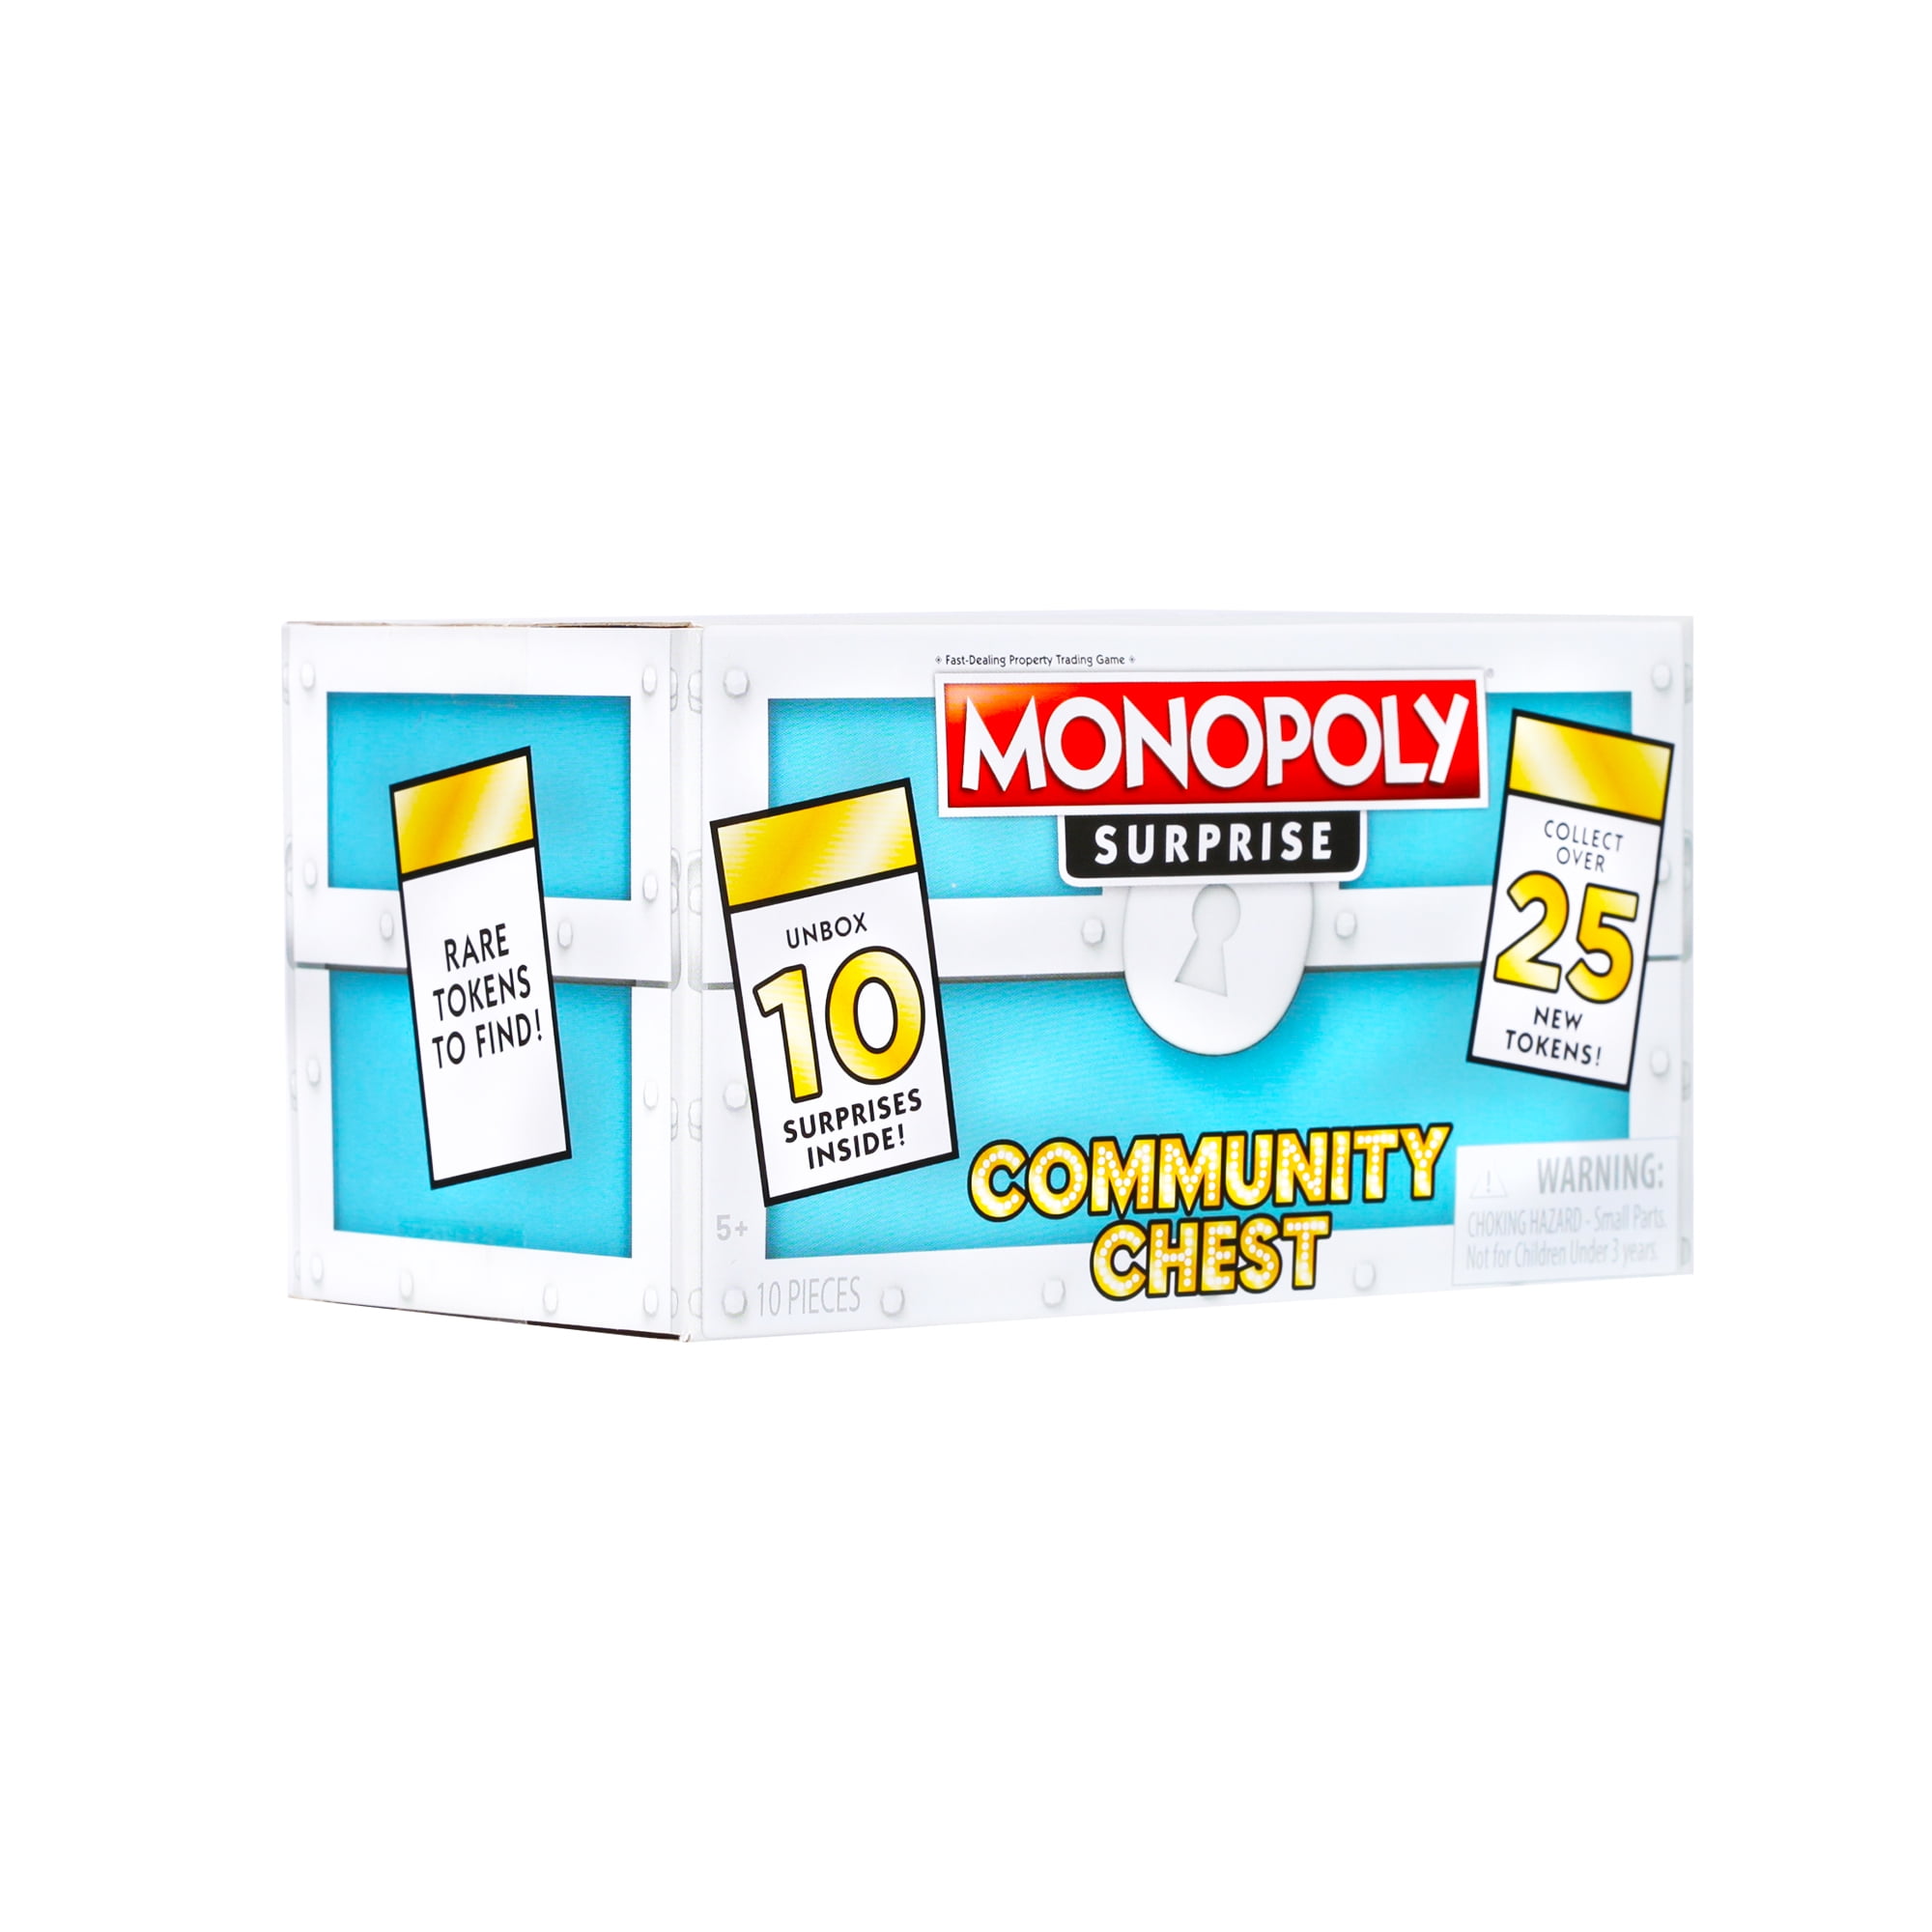 Monopoly Surprise Box ULTRA RARE Set Collectible Tokens GOLD Pieces Series 1 